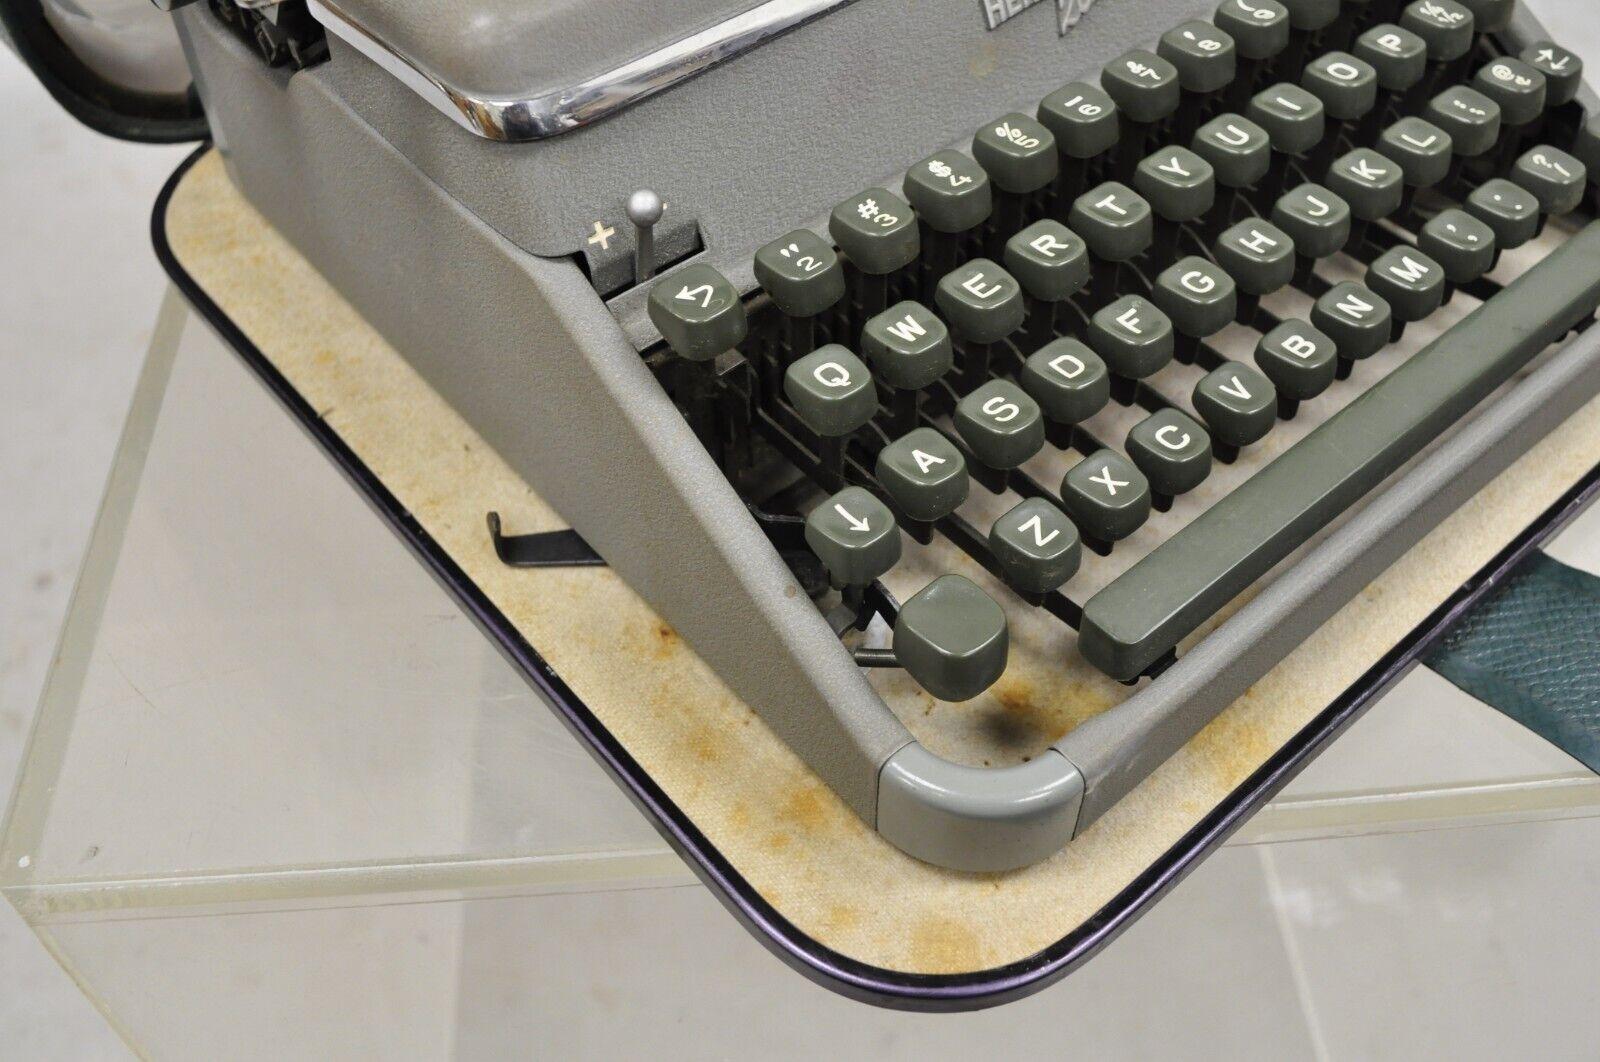 Metal Vintage Hermes 2000 by Paillard Manual Typewriter with Green Carrying Case